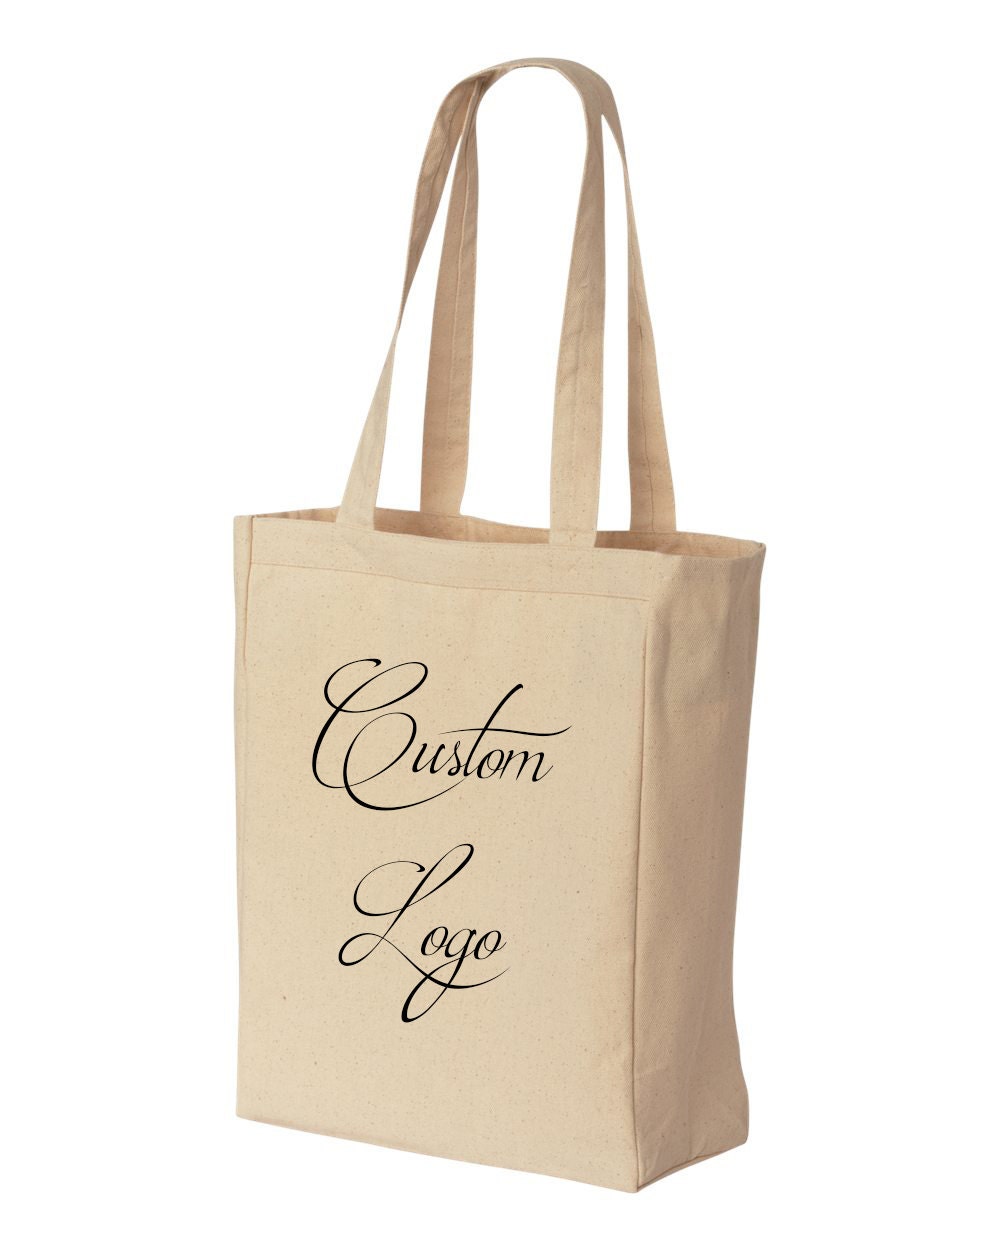 25 Custom canvas tote bags